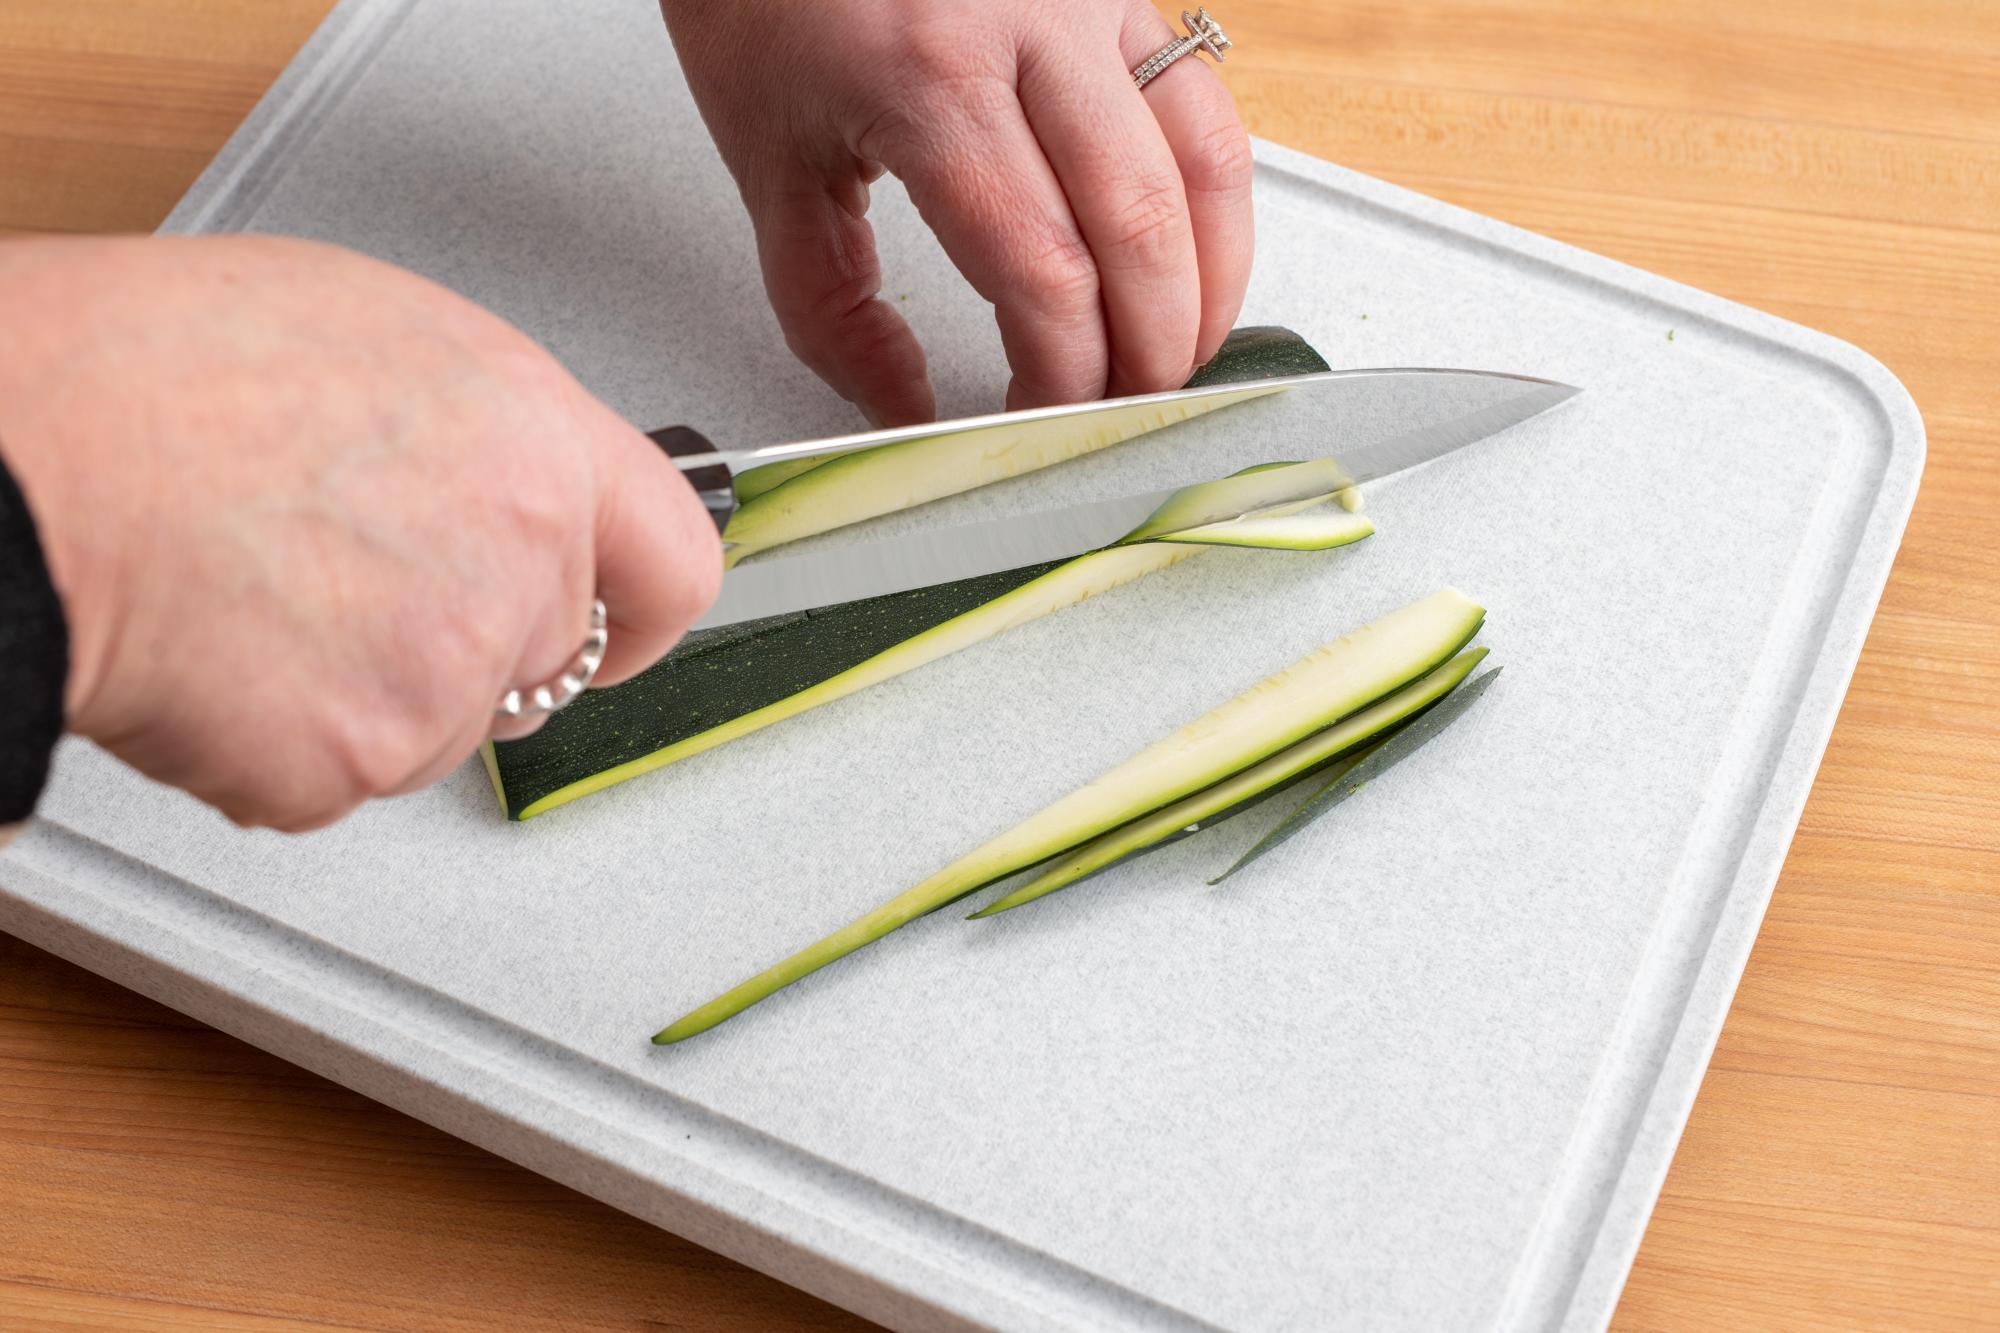 Cutting zucchini into thin strips.